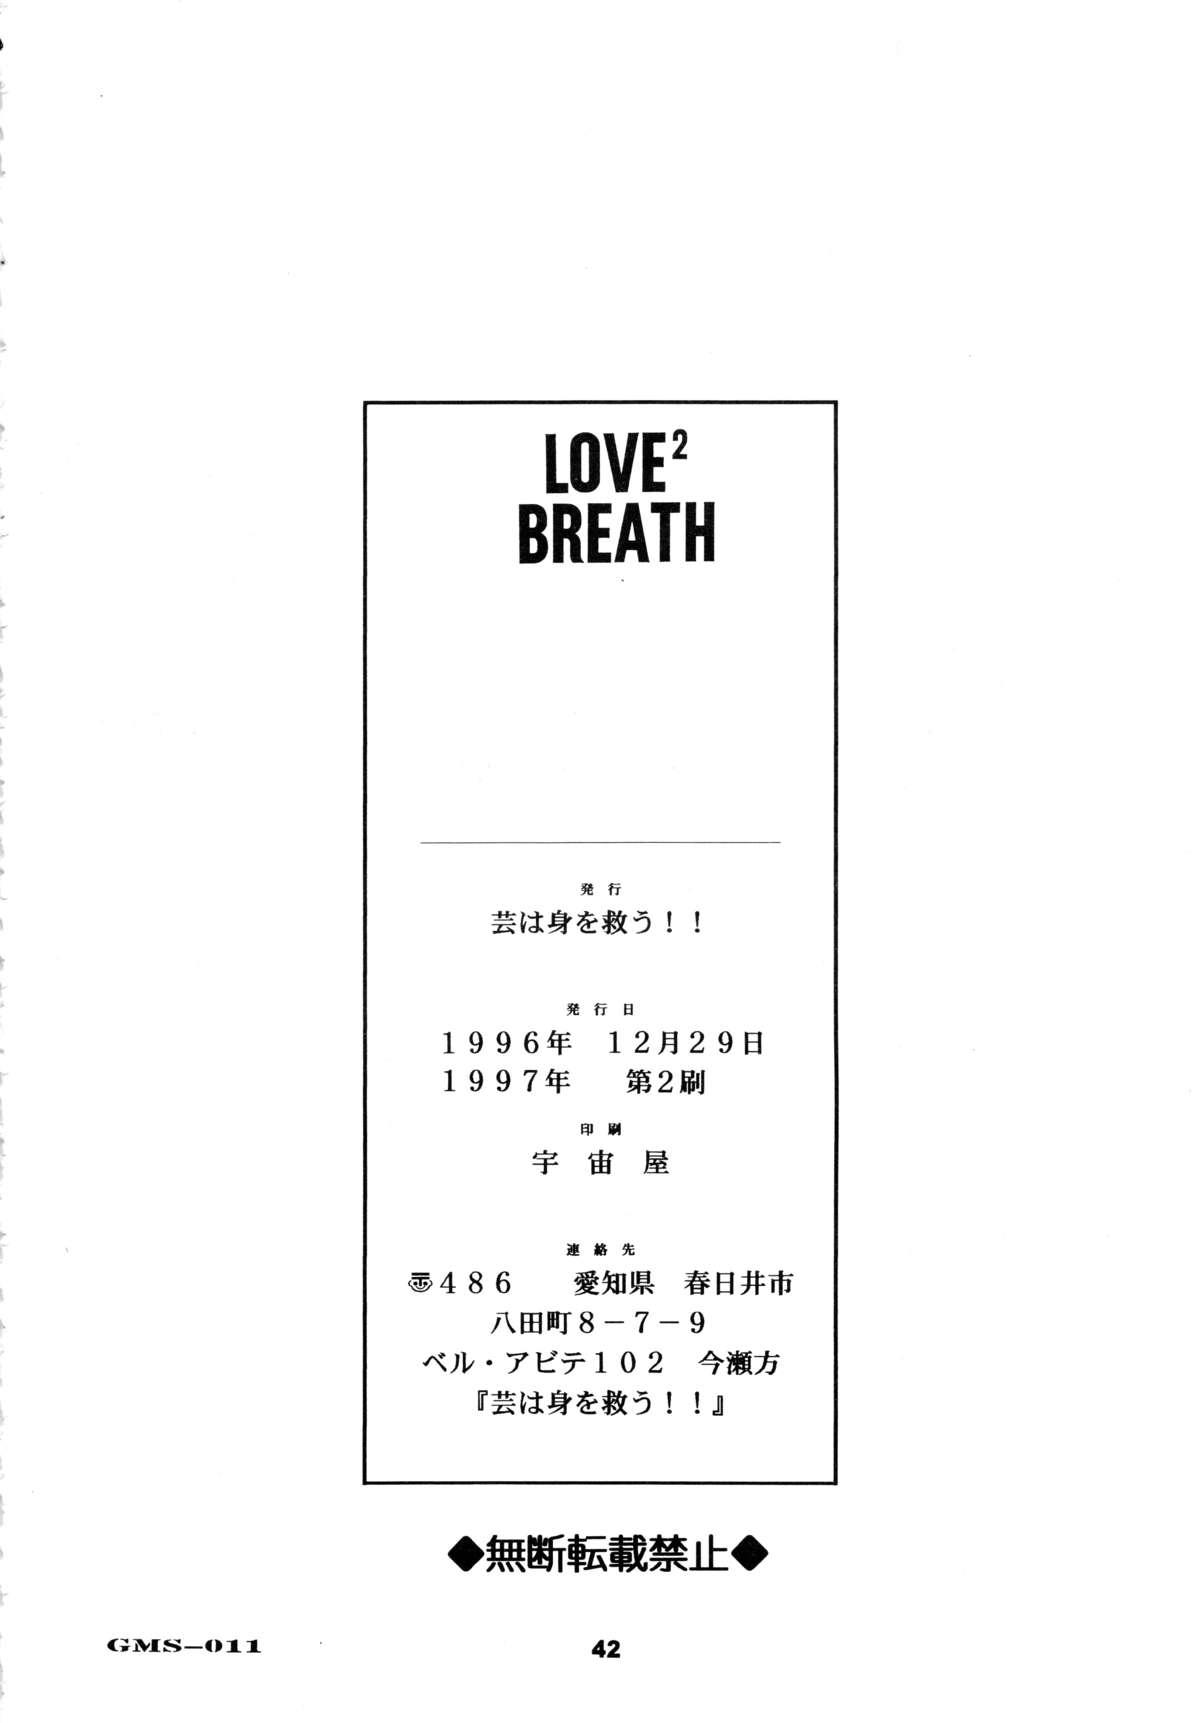 Mms LOVE² BREATH - Sakura taisen Martian successor nadesico Tokimeki memorial Youre under arrest Sex Toys - Page 42